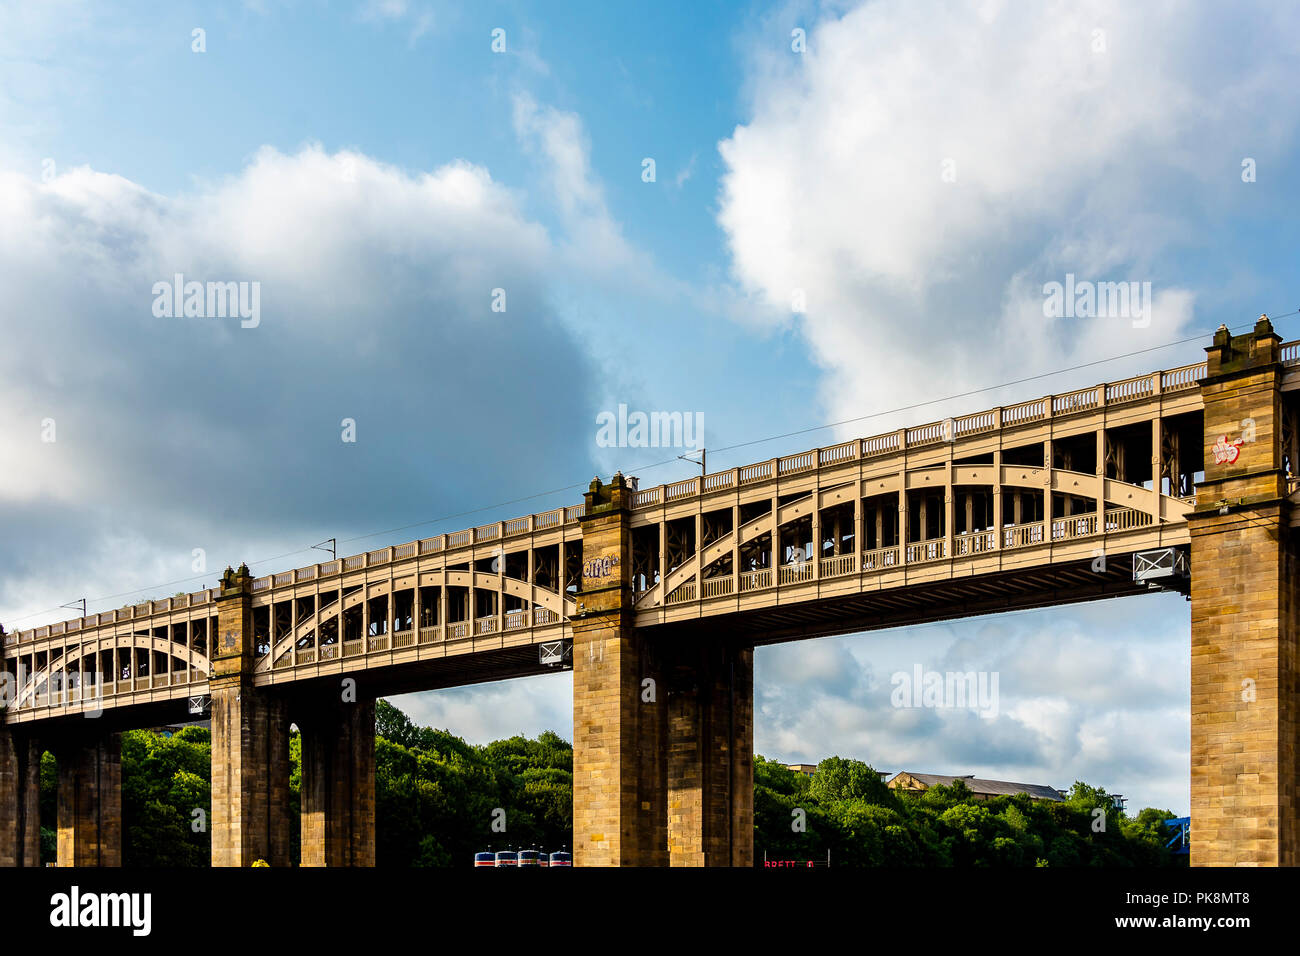 Newcastle upon Tyne, United Kingdom - August 27 2018: High Level Bridge road and railway bridge along Tyne River, distinctive architectural Stock Photo